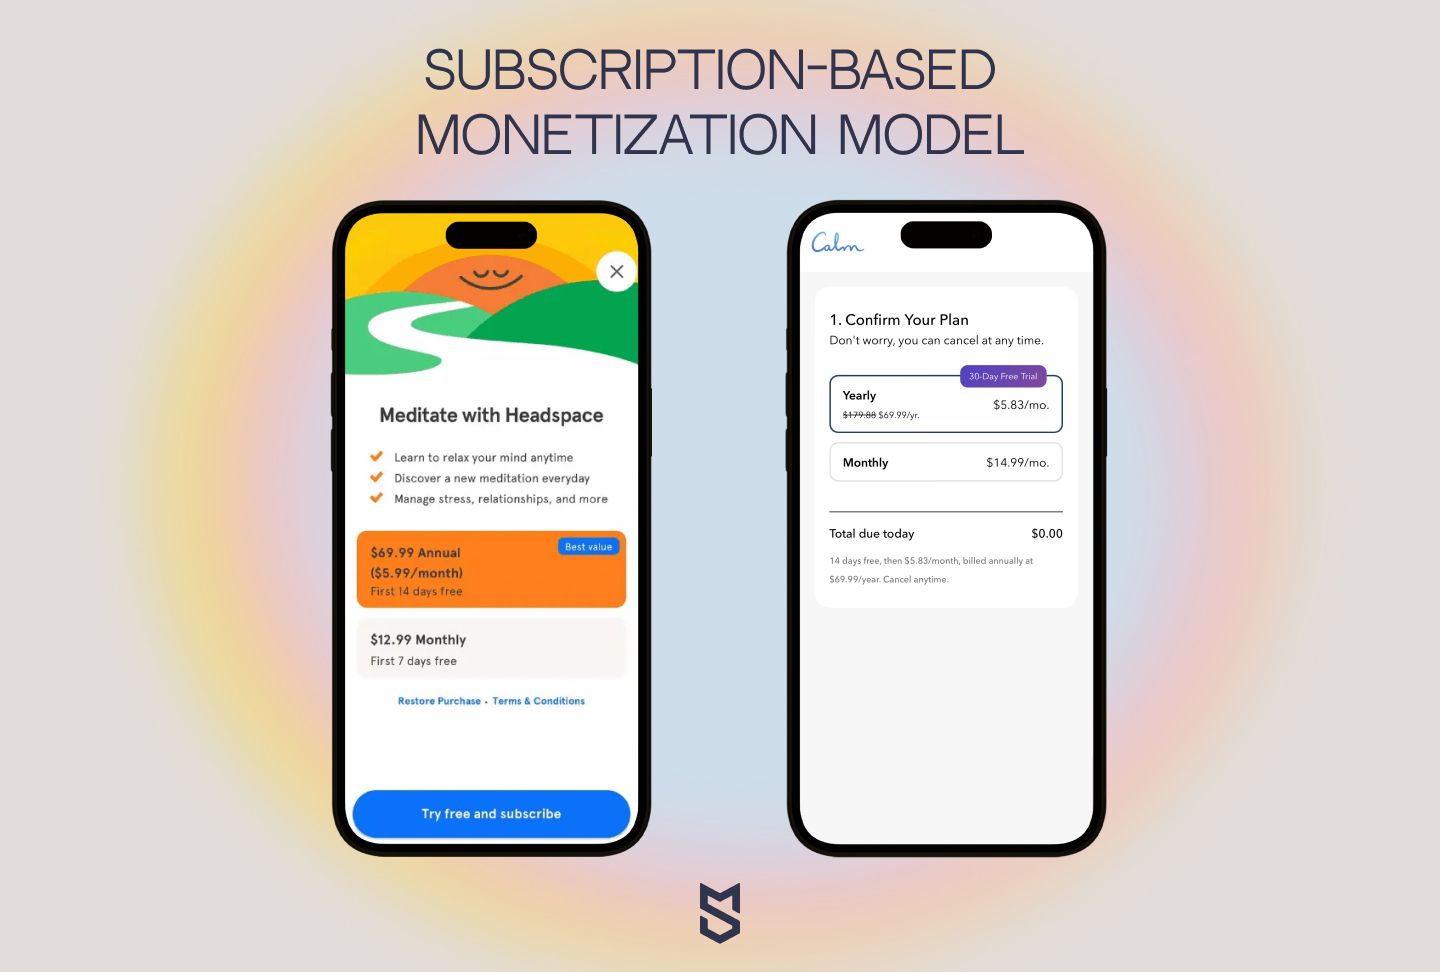 Subscription-based monetization model